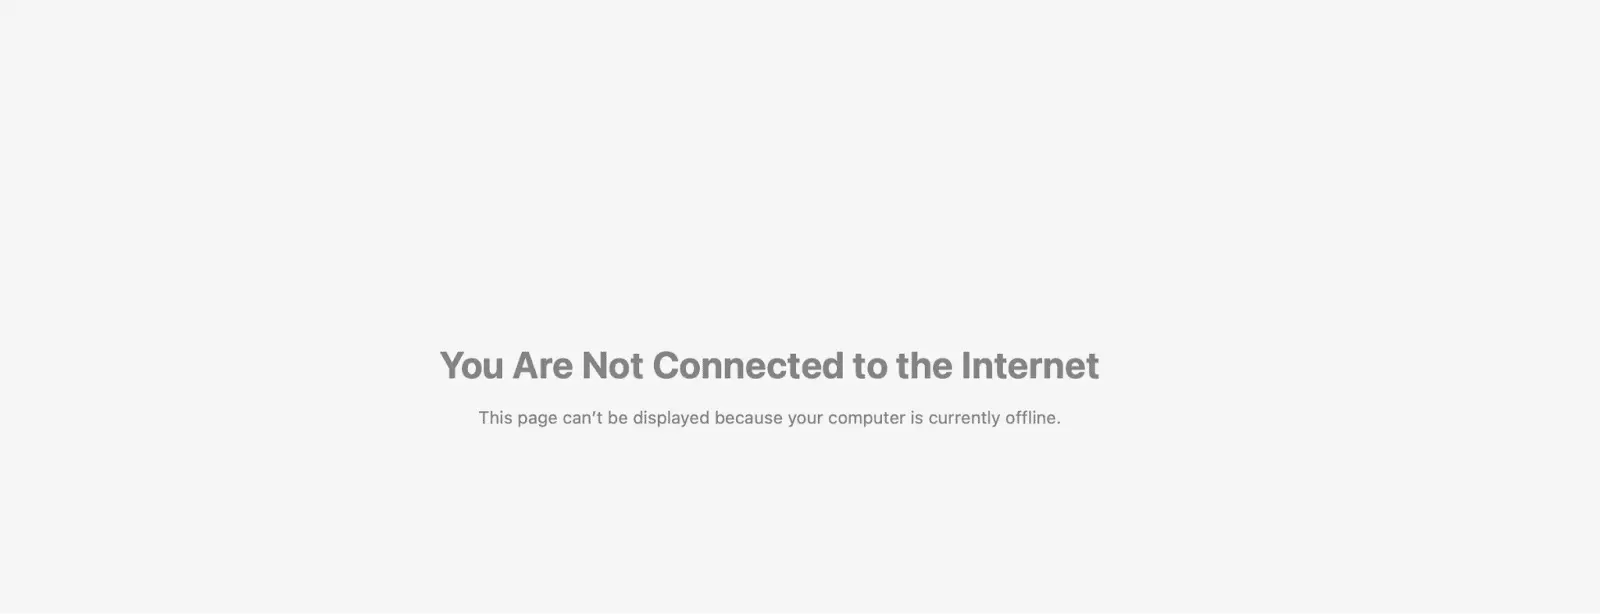 No internet warning in Chrome